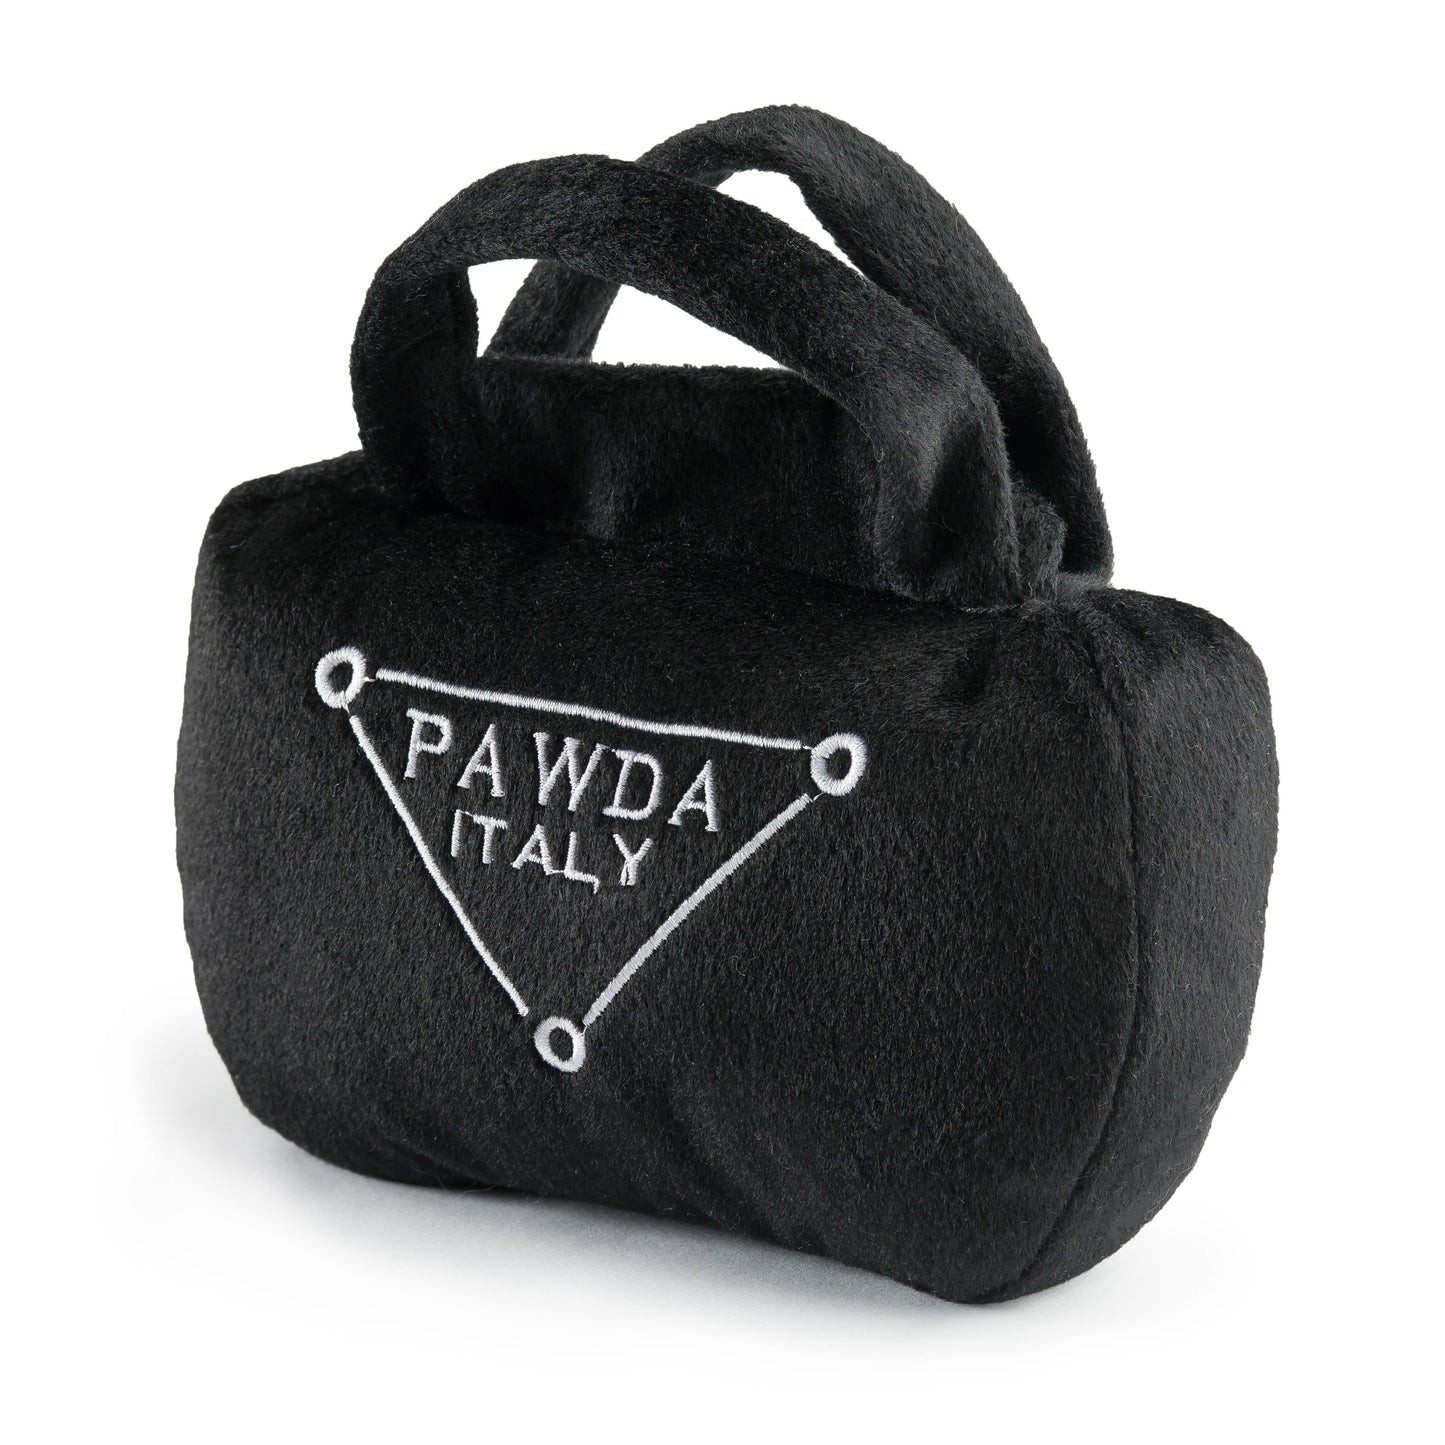 Haute Diggity Dog - Pawda Handbag Squeaker Dog Toy